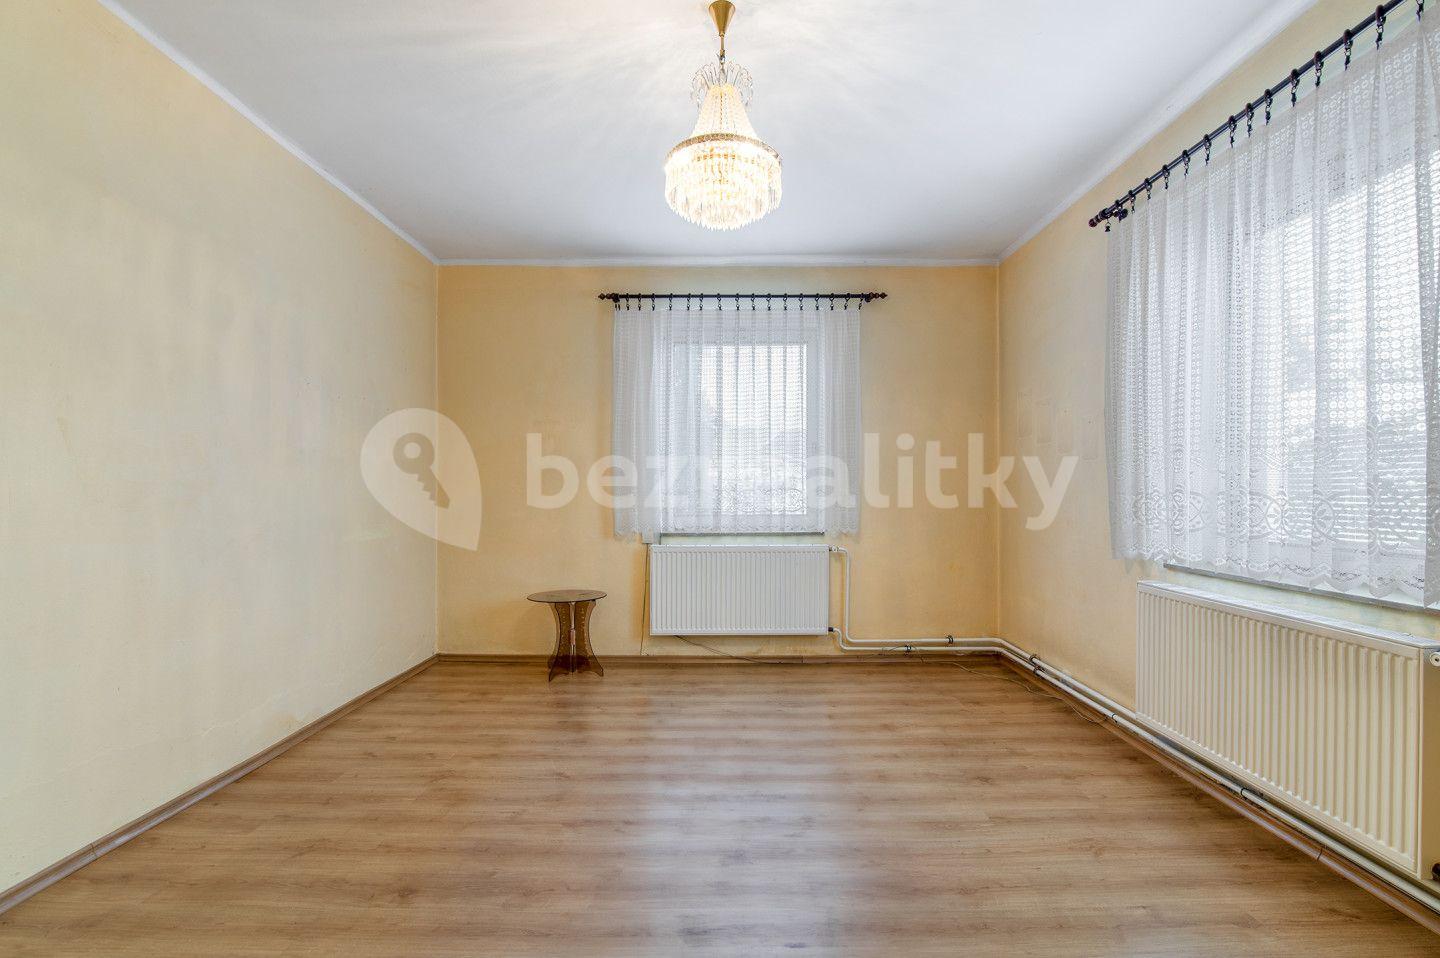 Prodej domu 159 m², pozemek 755 m², Dvořákova, Doksy, Liberecký kraj